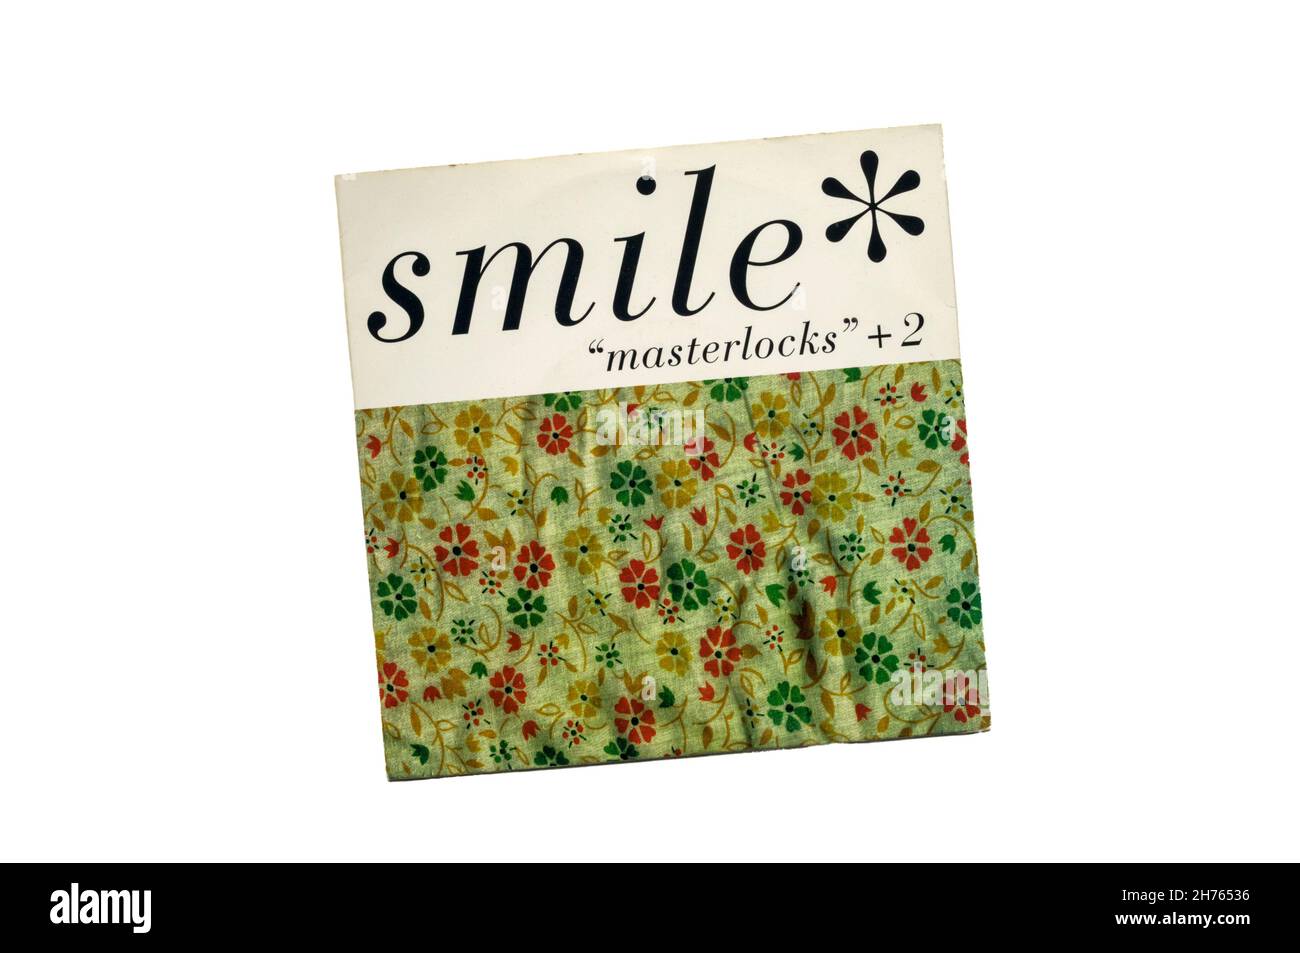 1996 7' Single, 'Masterlocks' +2 der amerikanischen alternativen Rockband Smile. Stockfoto